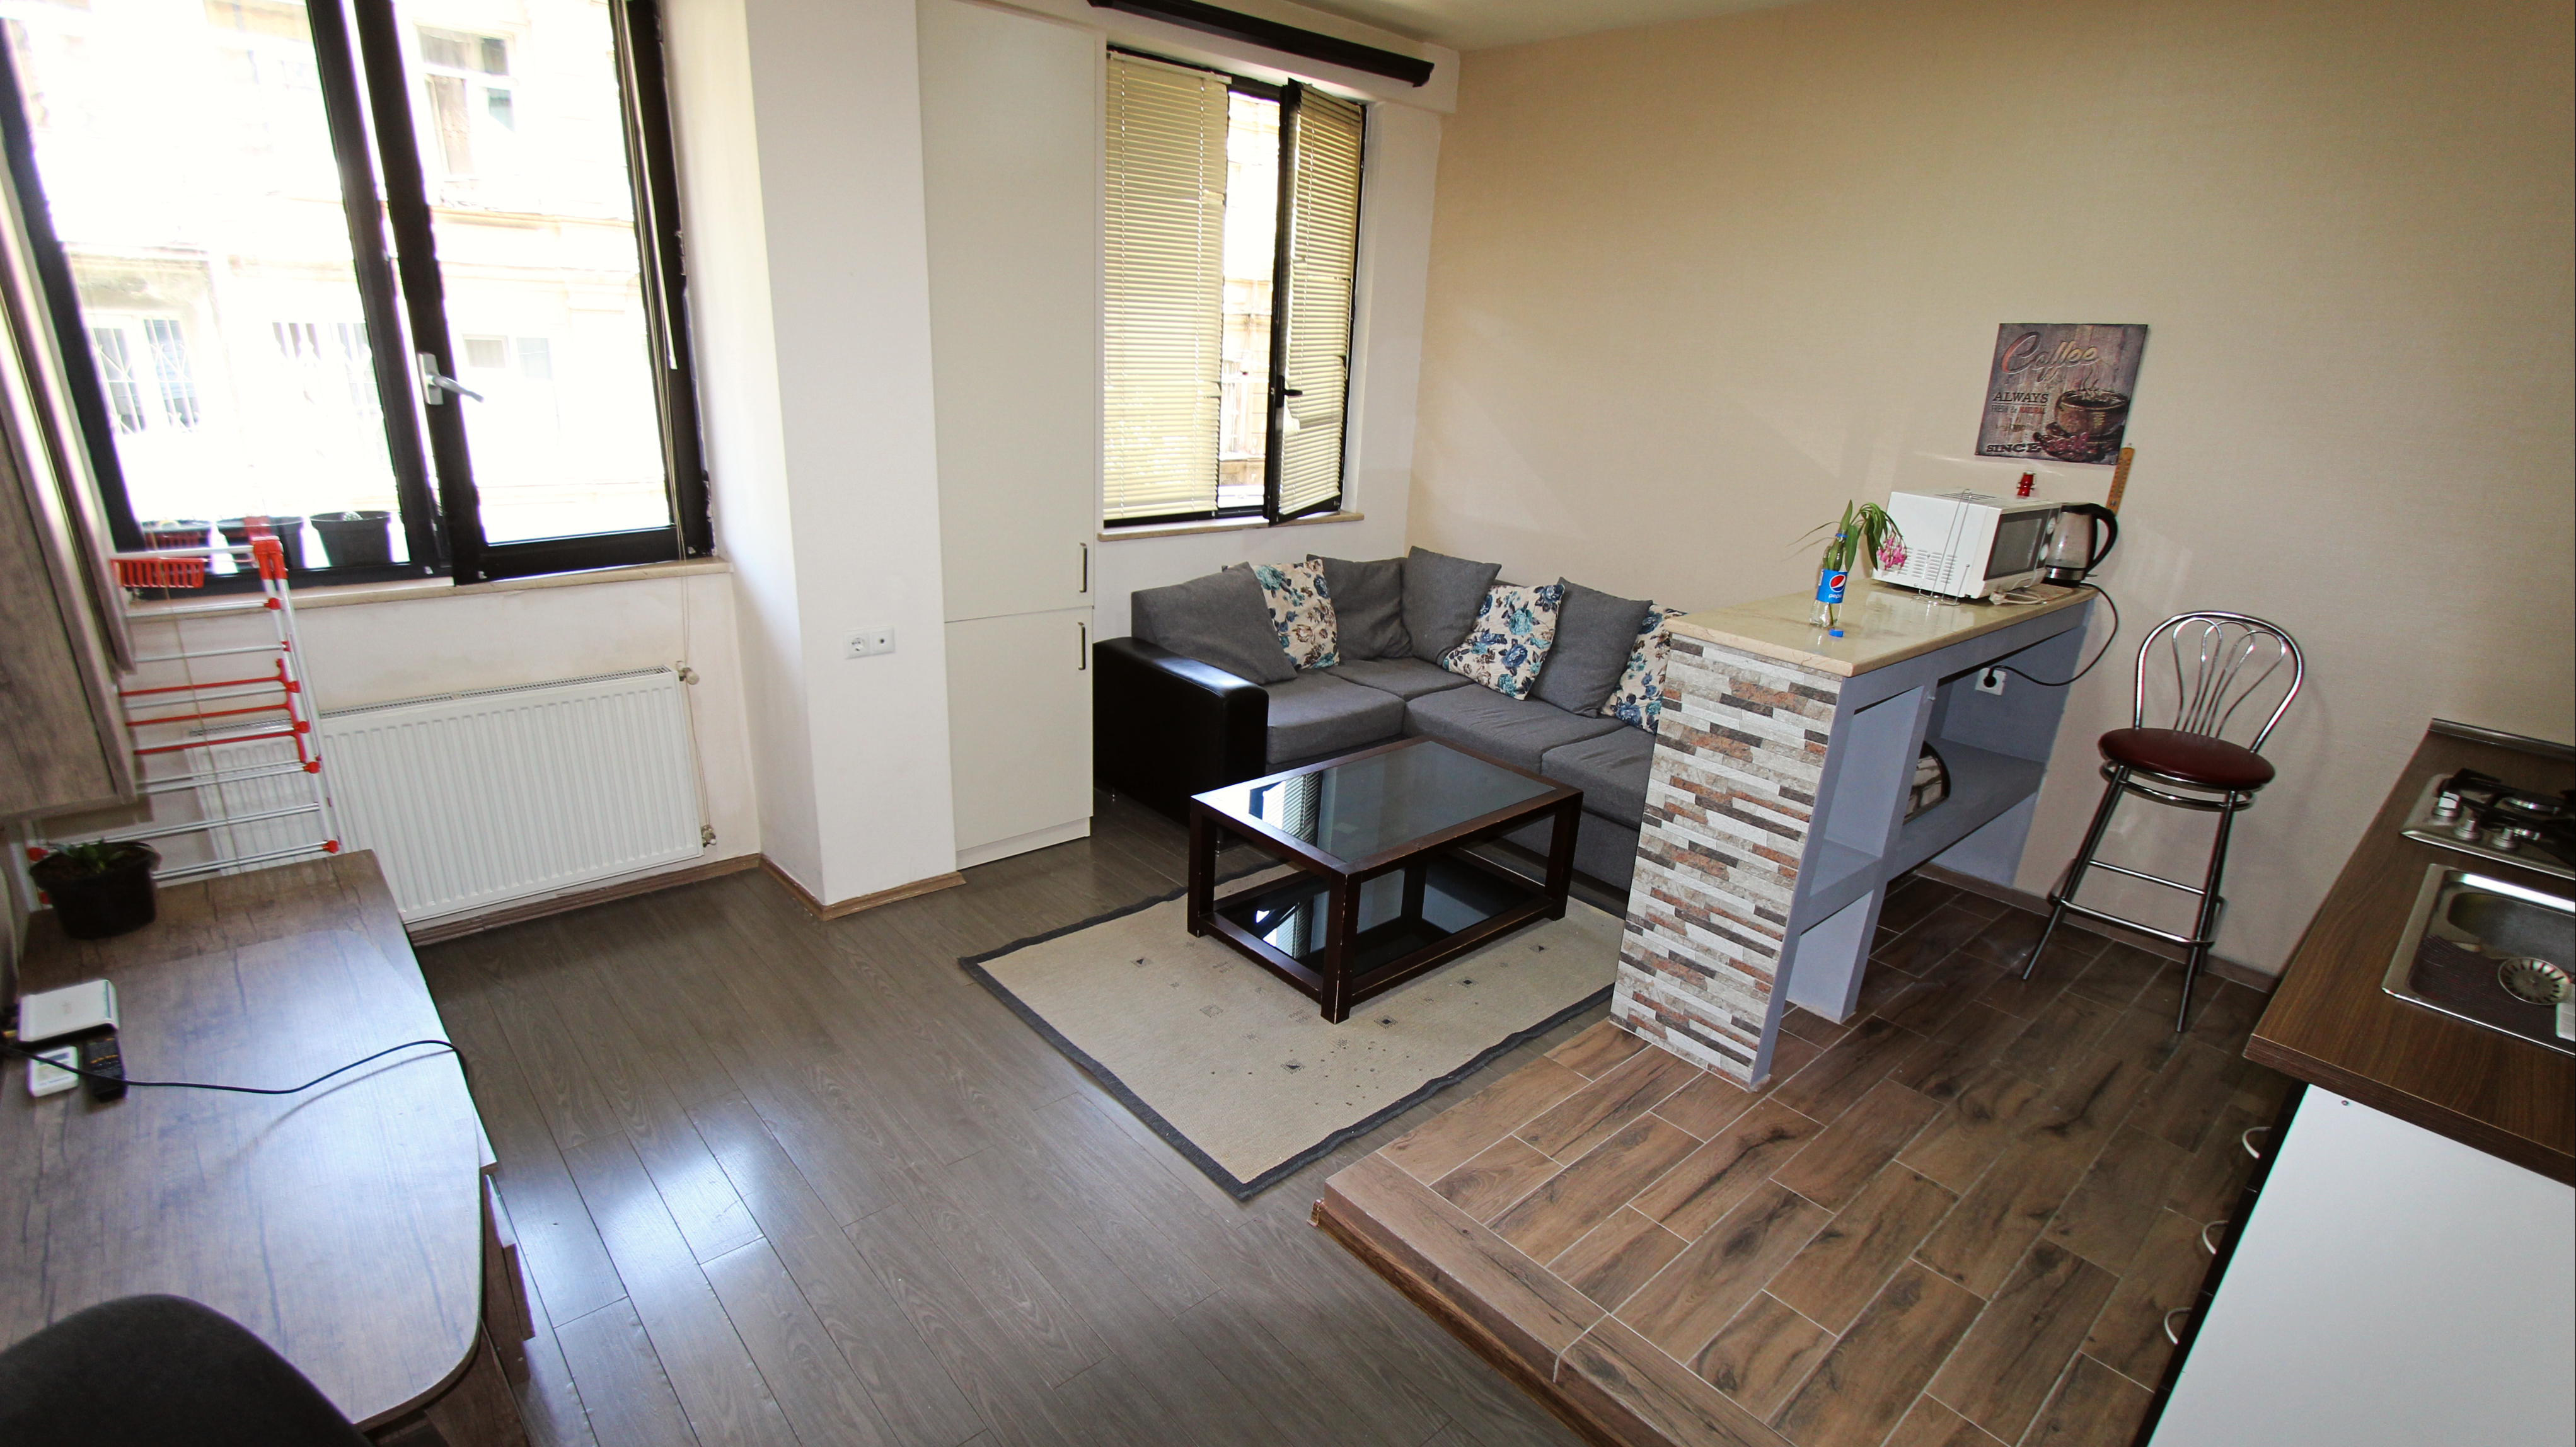 2-Room Apartment For Rent at “m2 Chubinashvili”